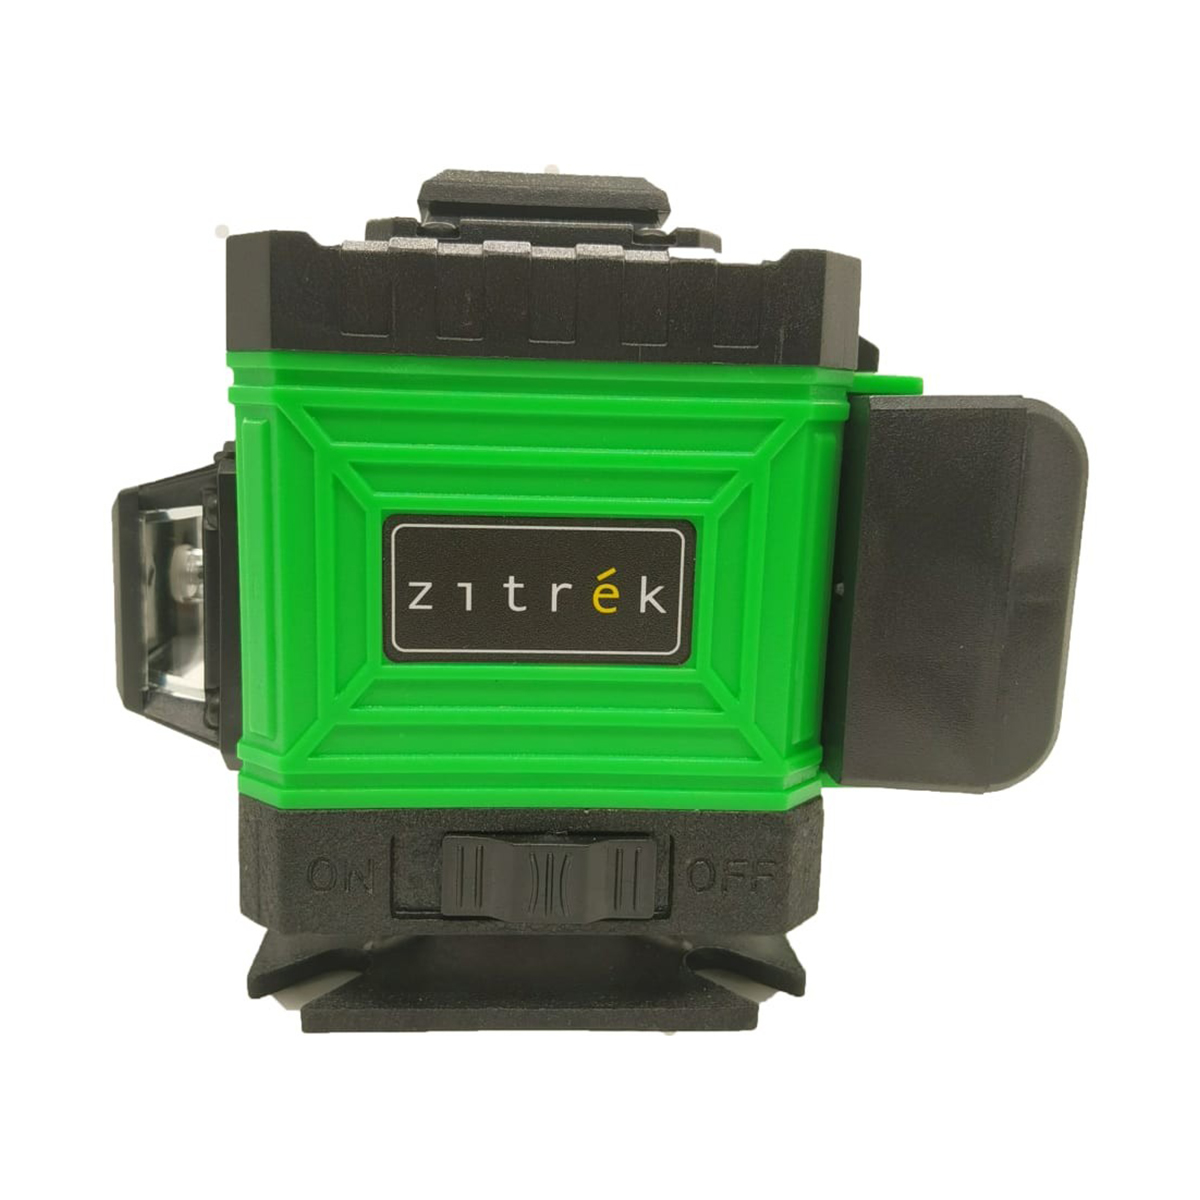 Ll12 gl cube. Zitrek ll12-gl-Cube. Построитель лазерных плоскостей Zitrek ll12-gl-Cube. Zitrek ll12-gl-Cube 065-0168. Лазерный уровень Zitrek ll12-gl 065-0168.